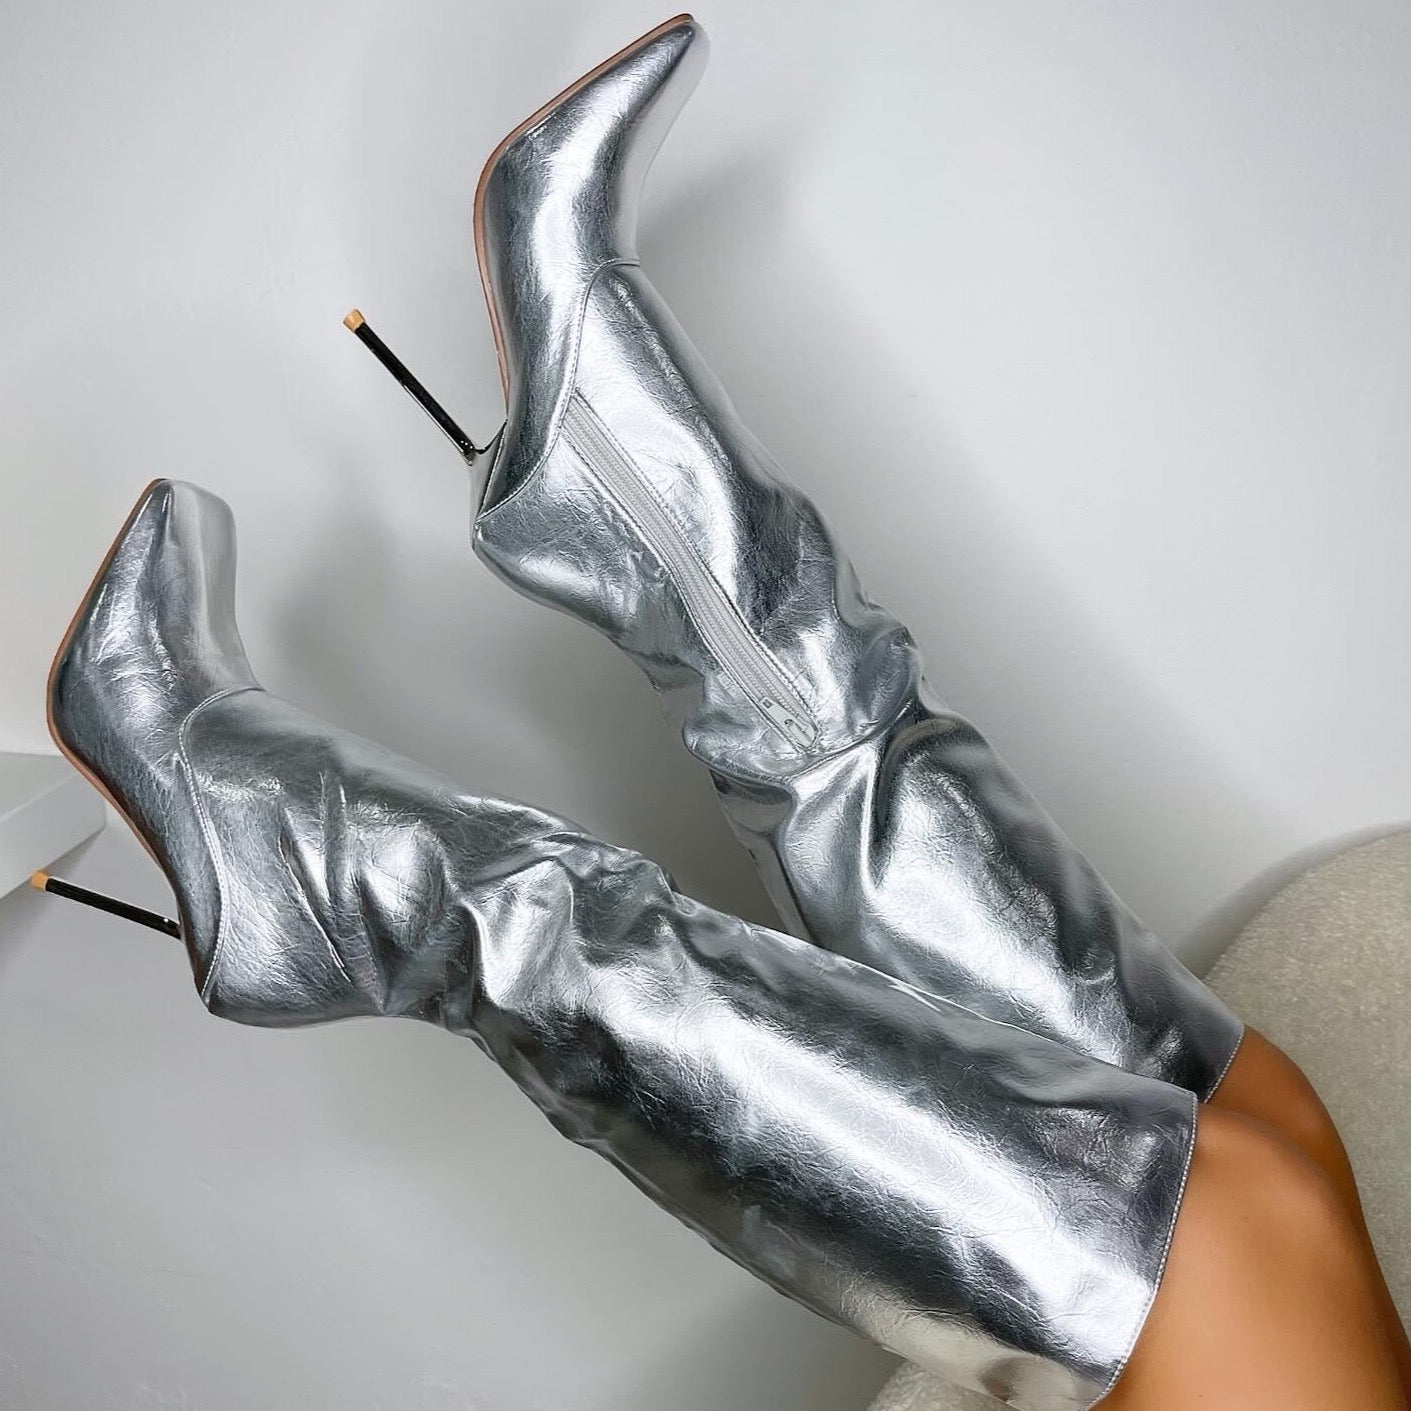 Metallic Silver Boots